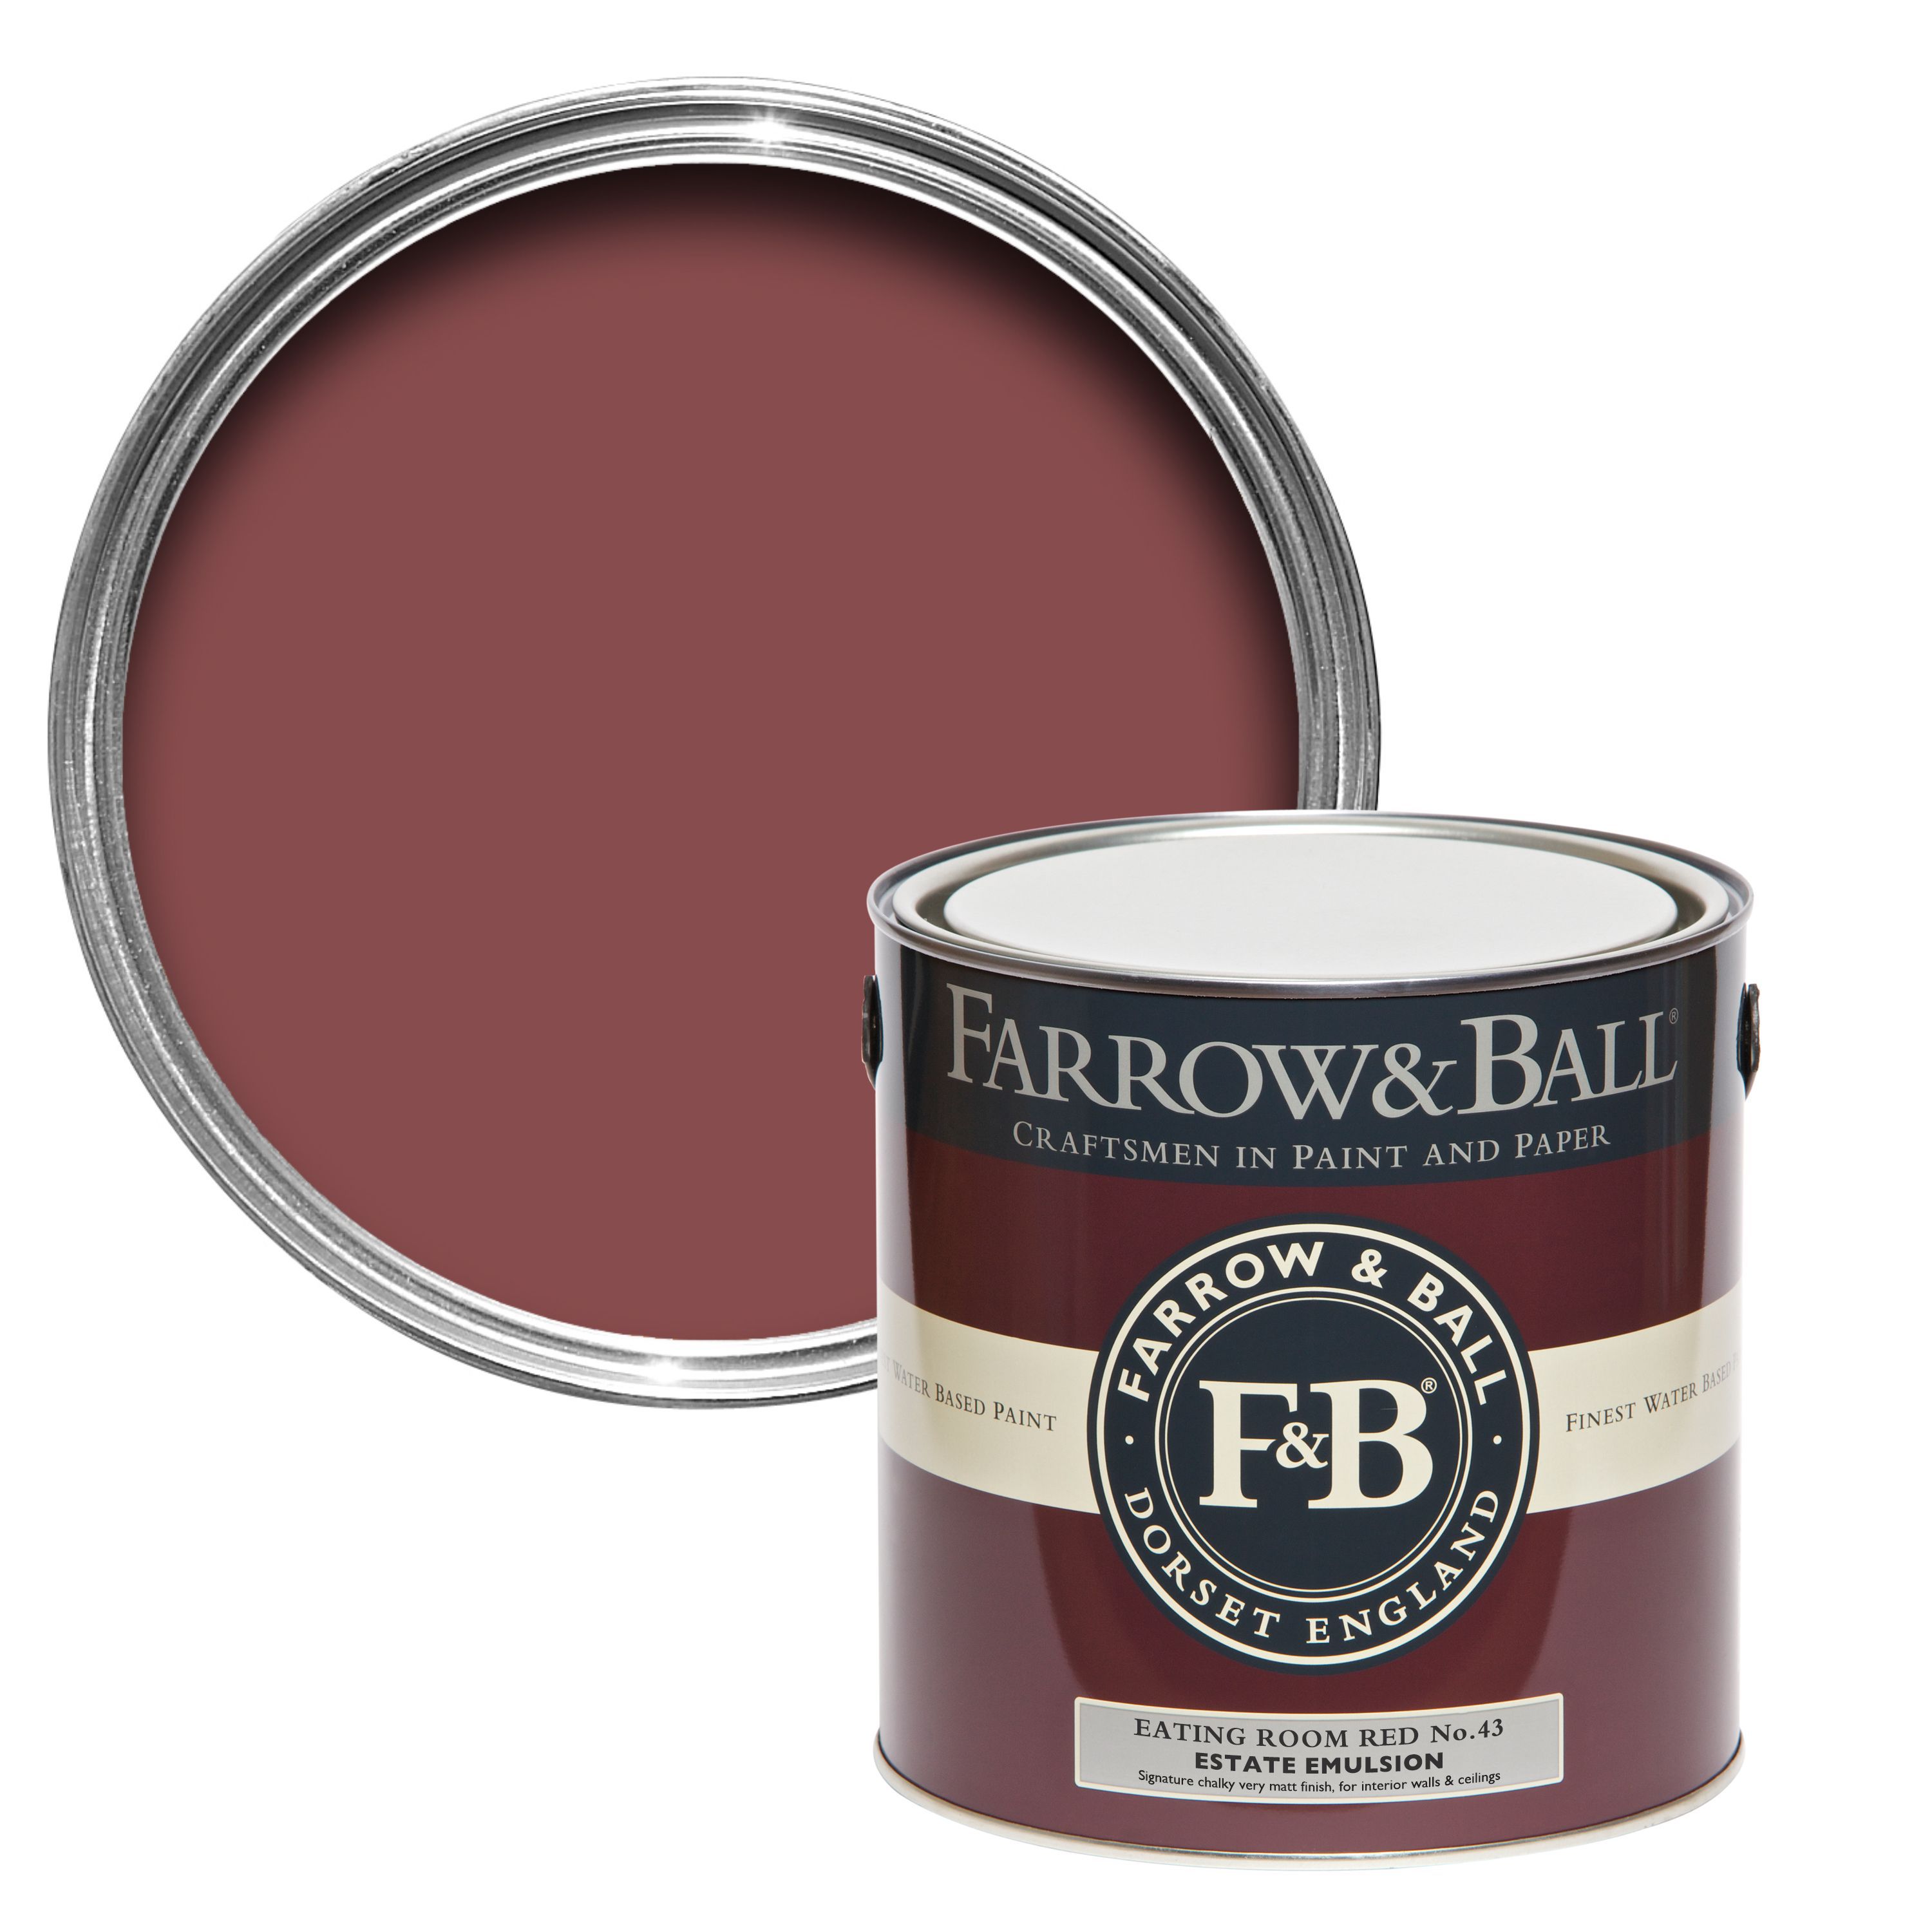 Farrow & Ball Estate Eating room red Matt Emulsion paint, 2.5L